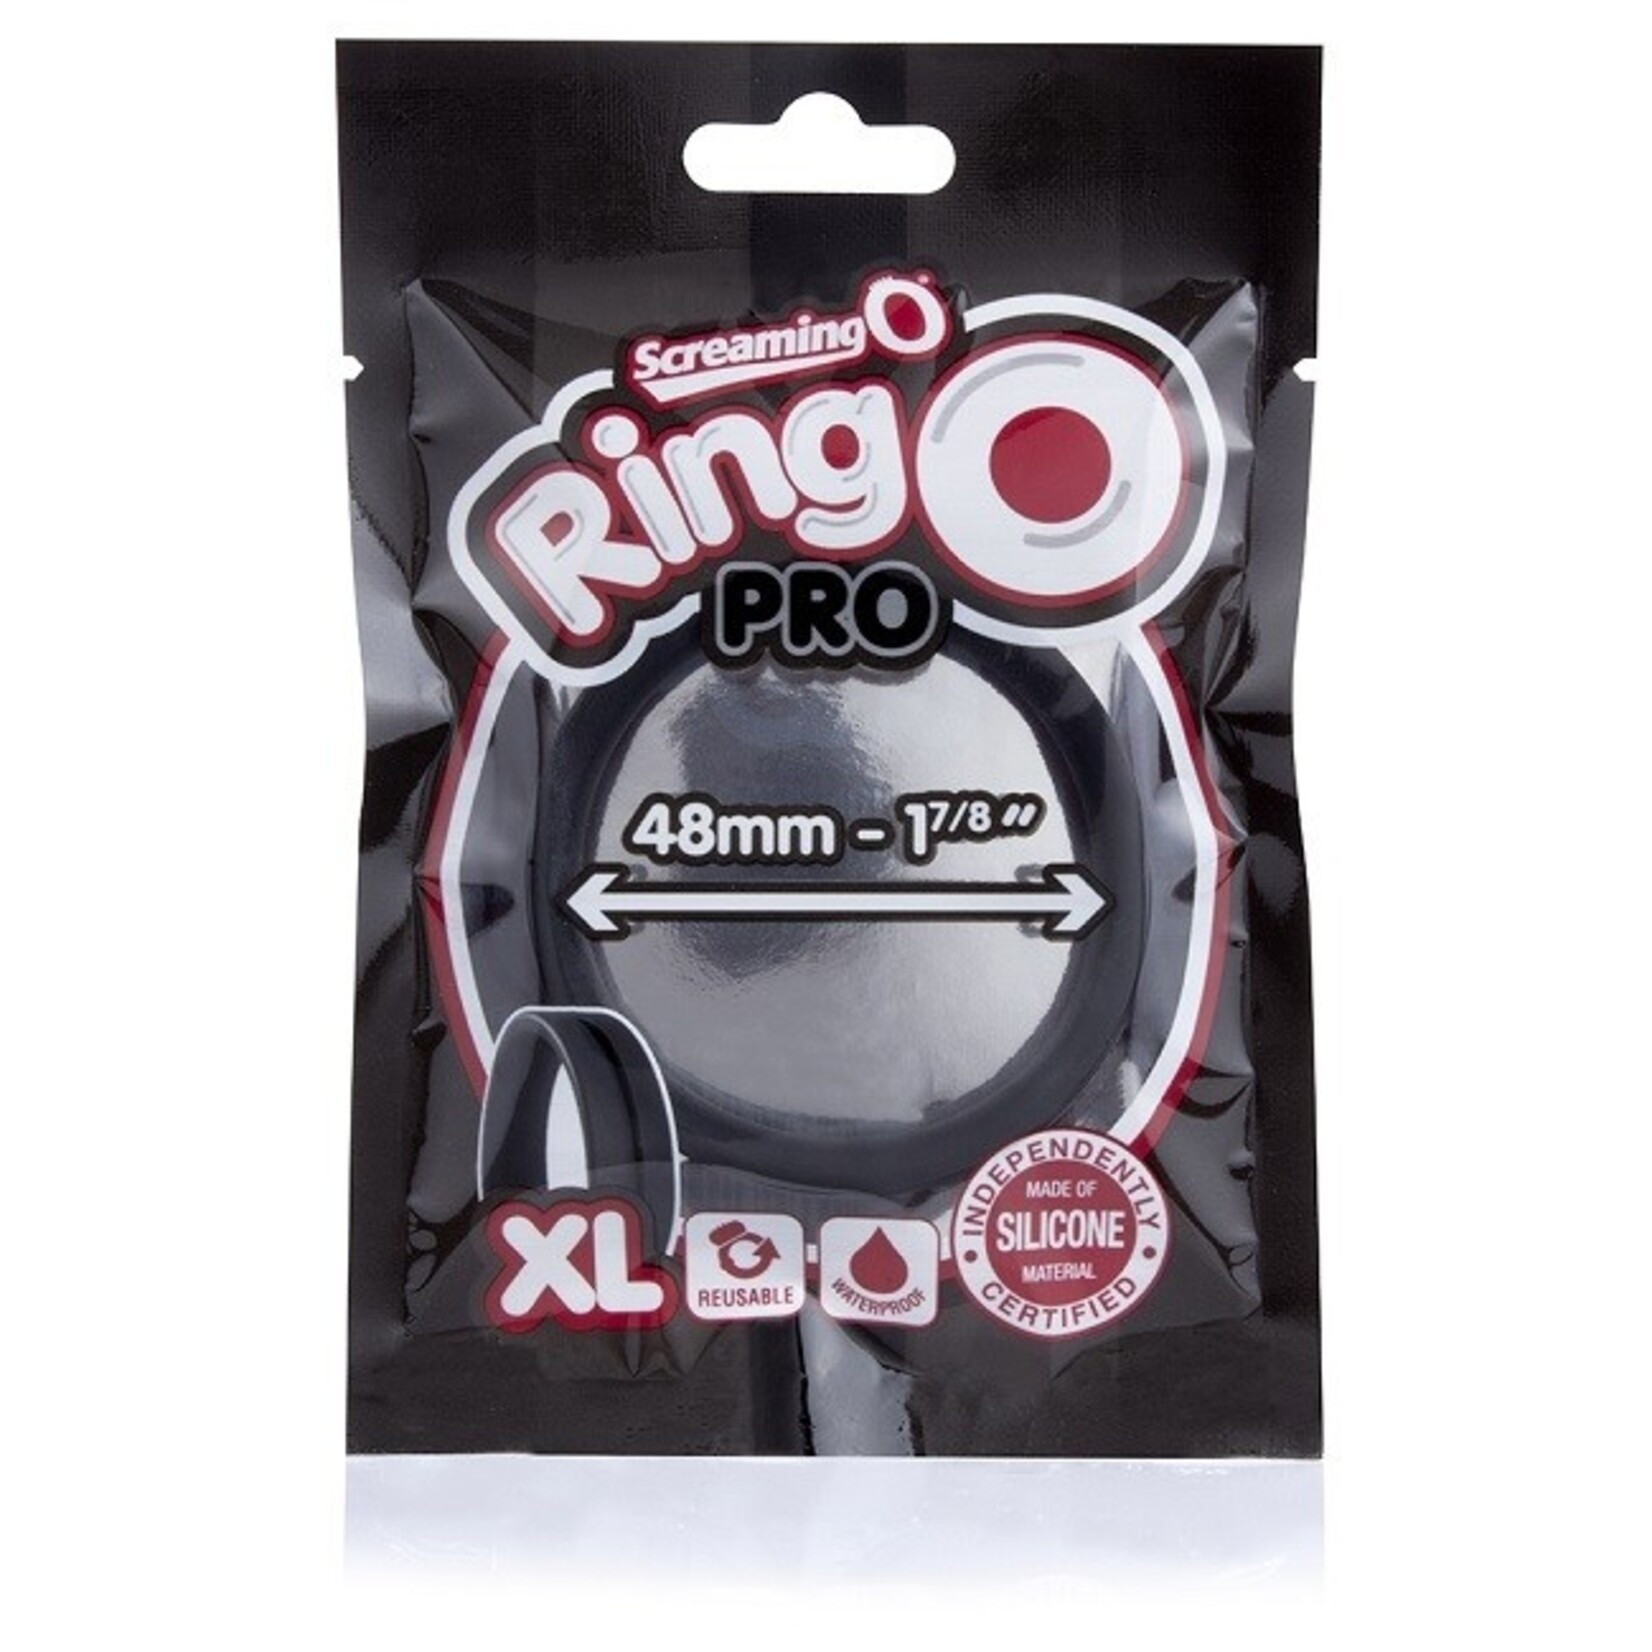 Screaming O Screaming O - RingO Pro XL